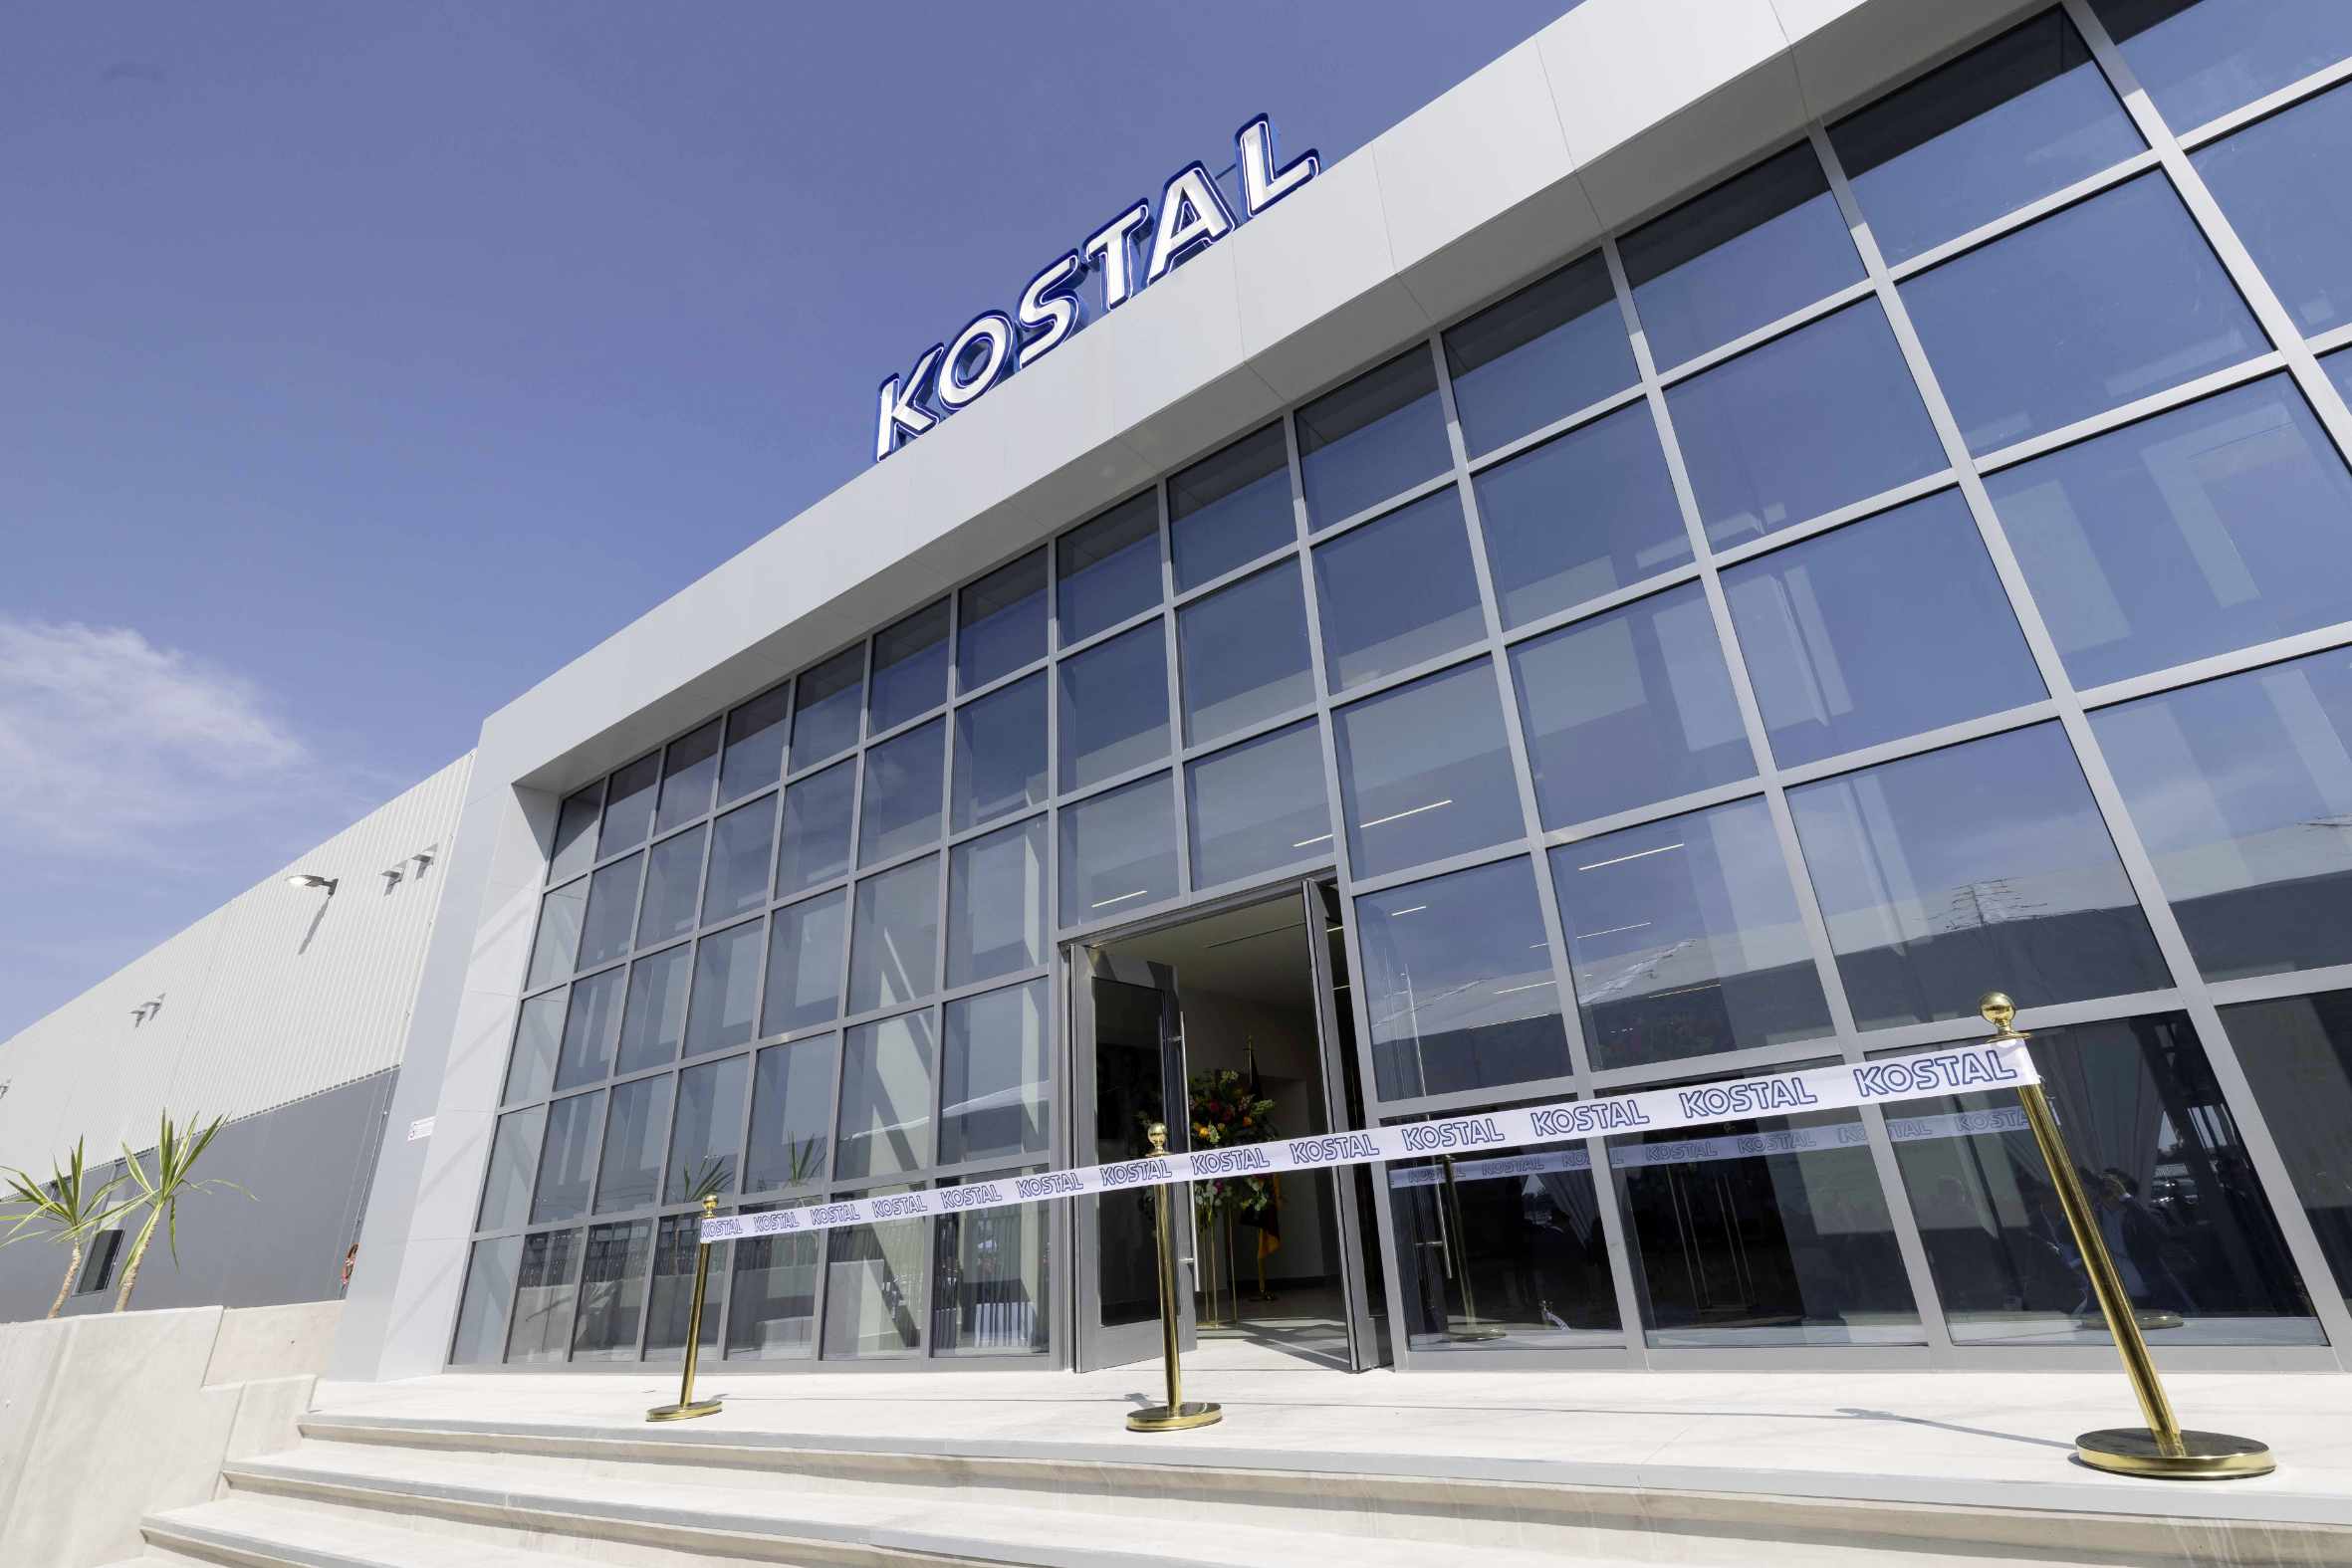 Kostal installs technology and administration center in Querétaro